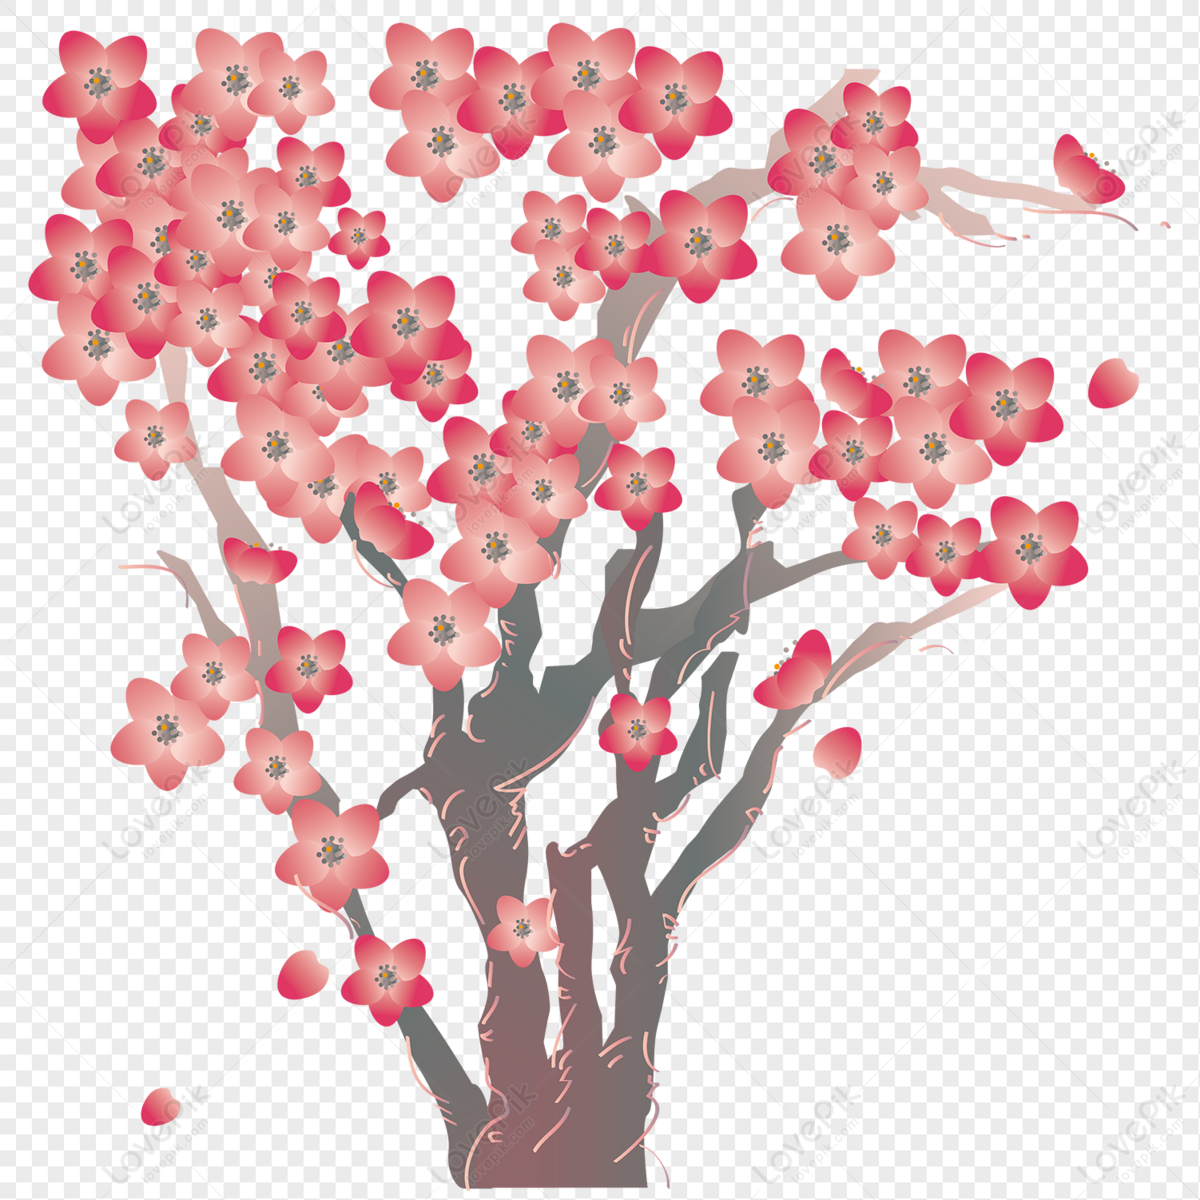 Large weeping cherry tree watercolor illustration - Stock Illustration  [83324663] - PIXTA